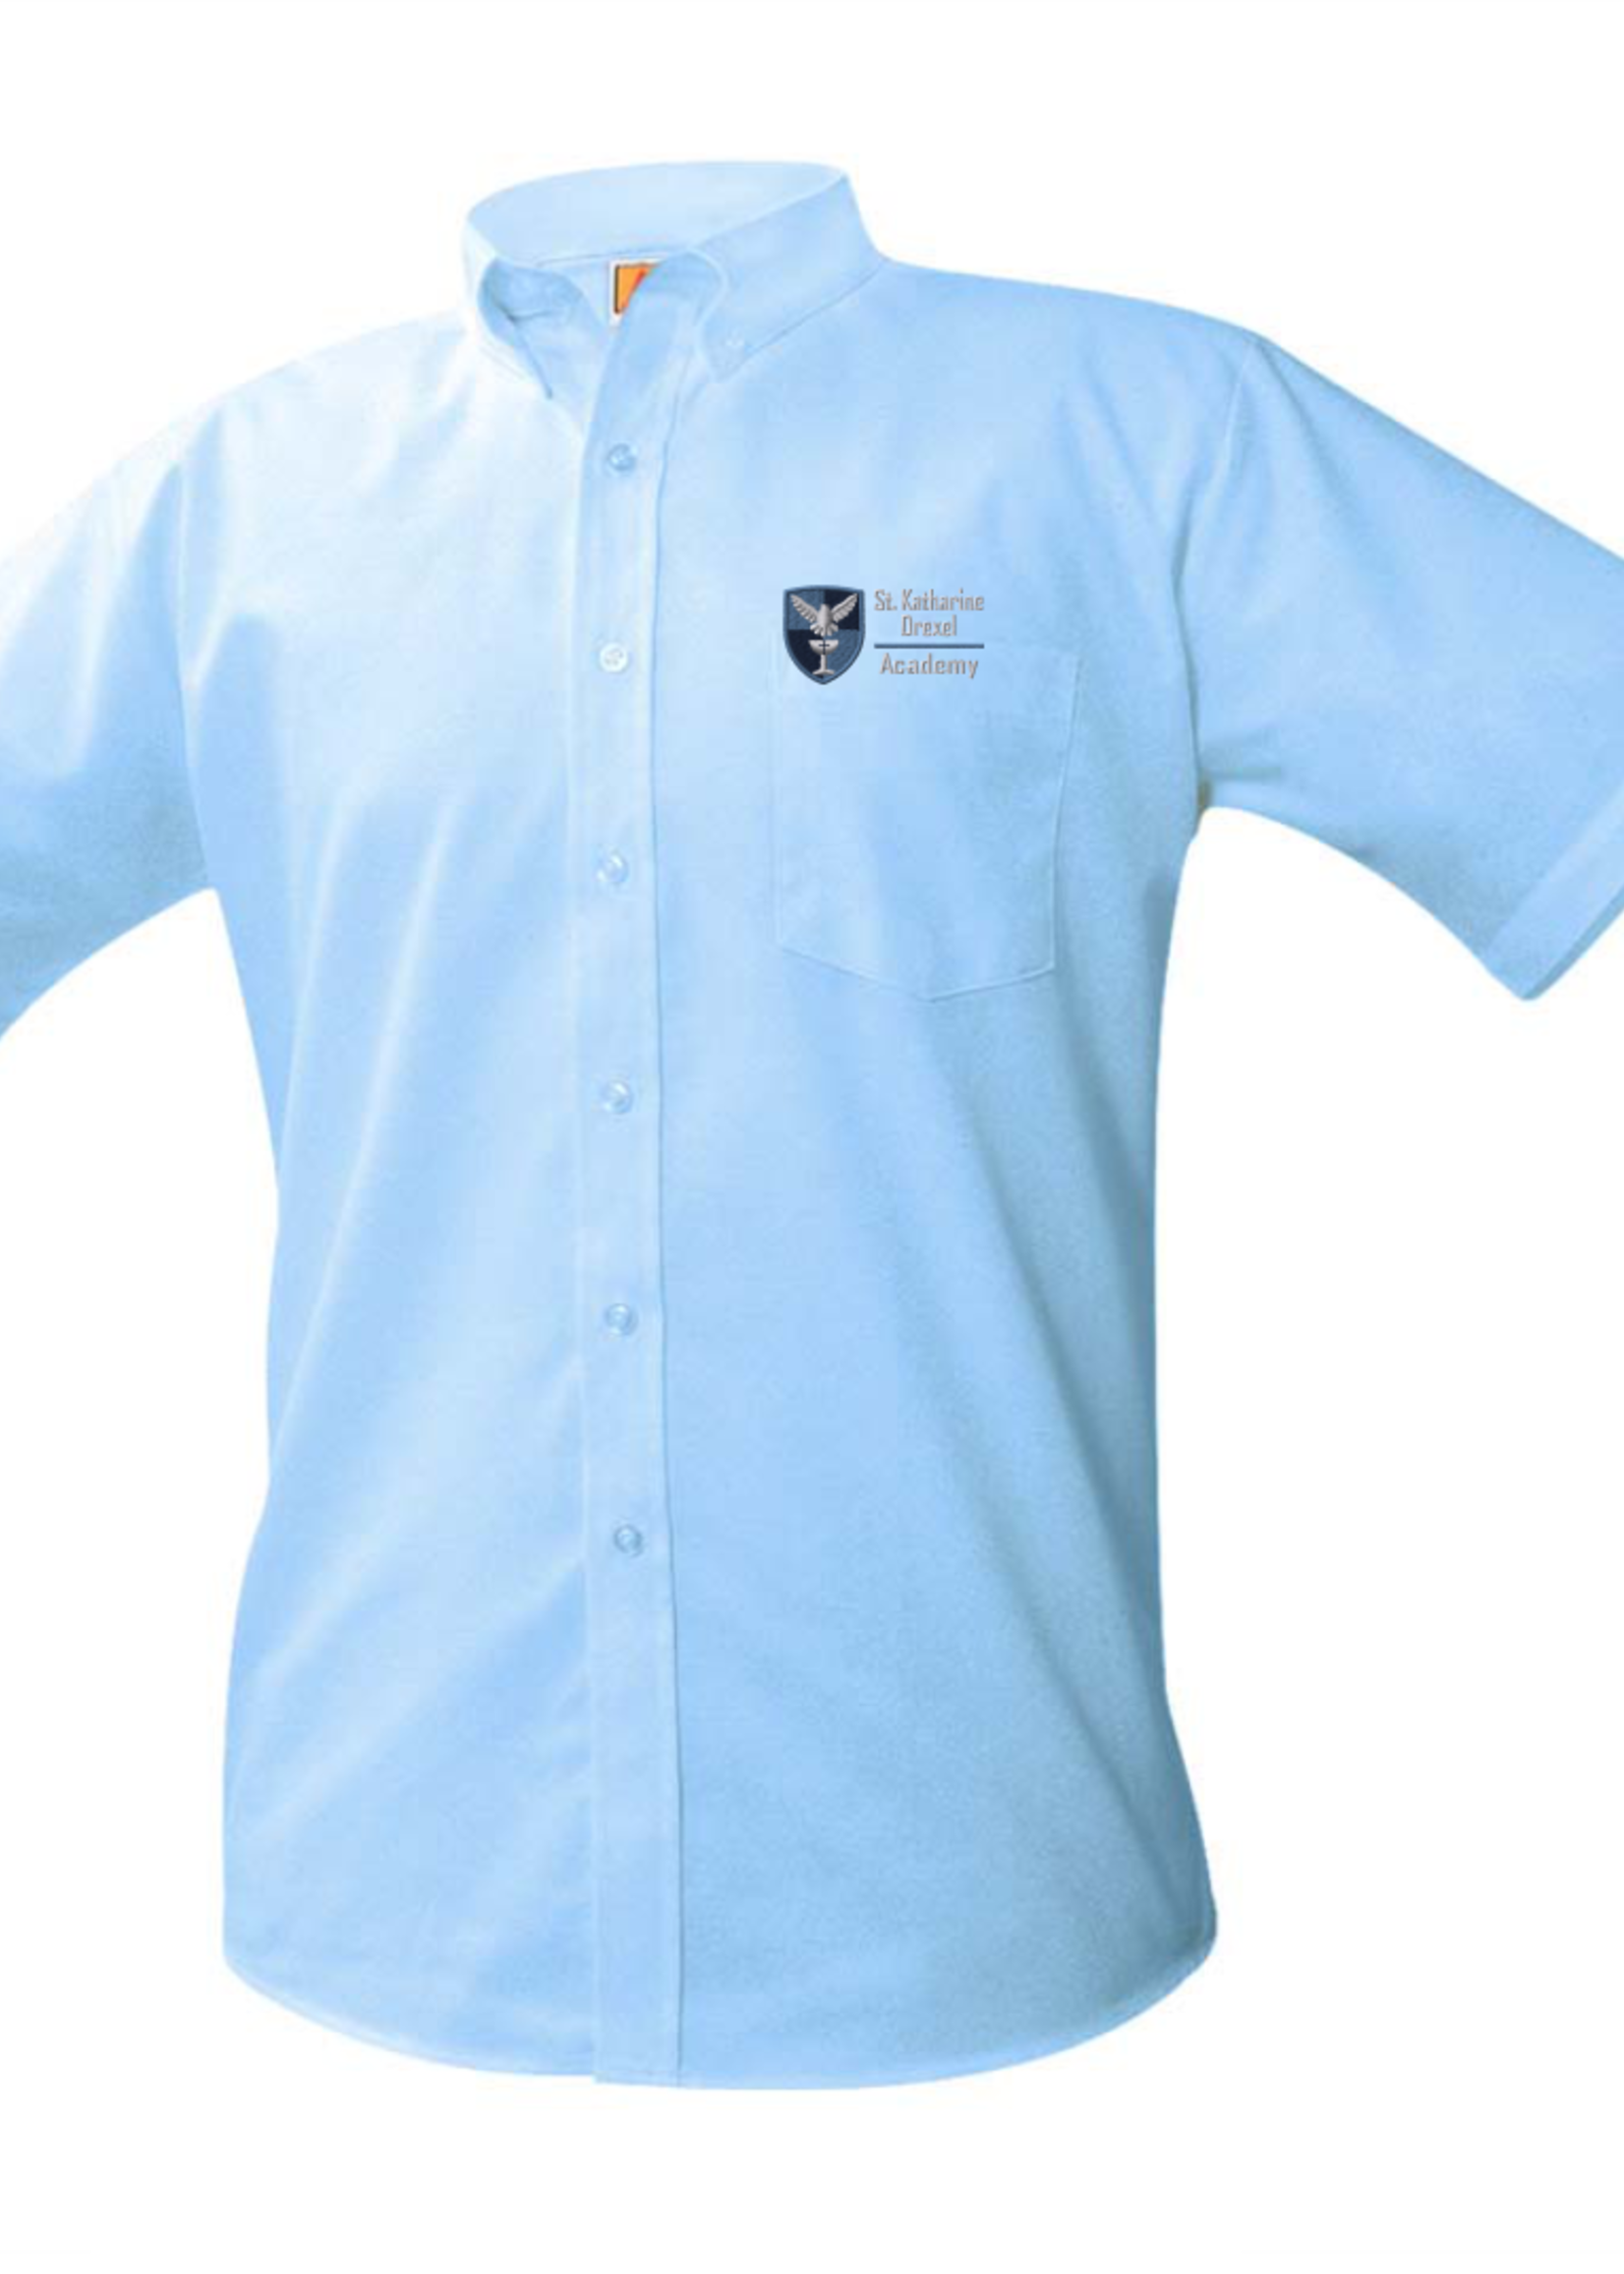 SKDA Lt. Blue Short Sleeve Oxford Shirt